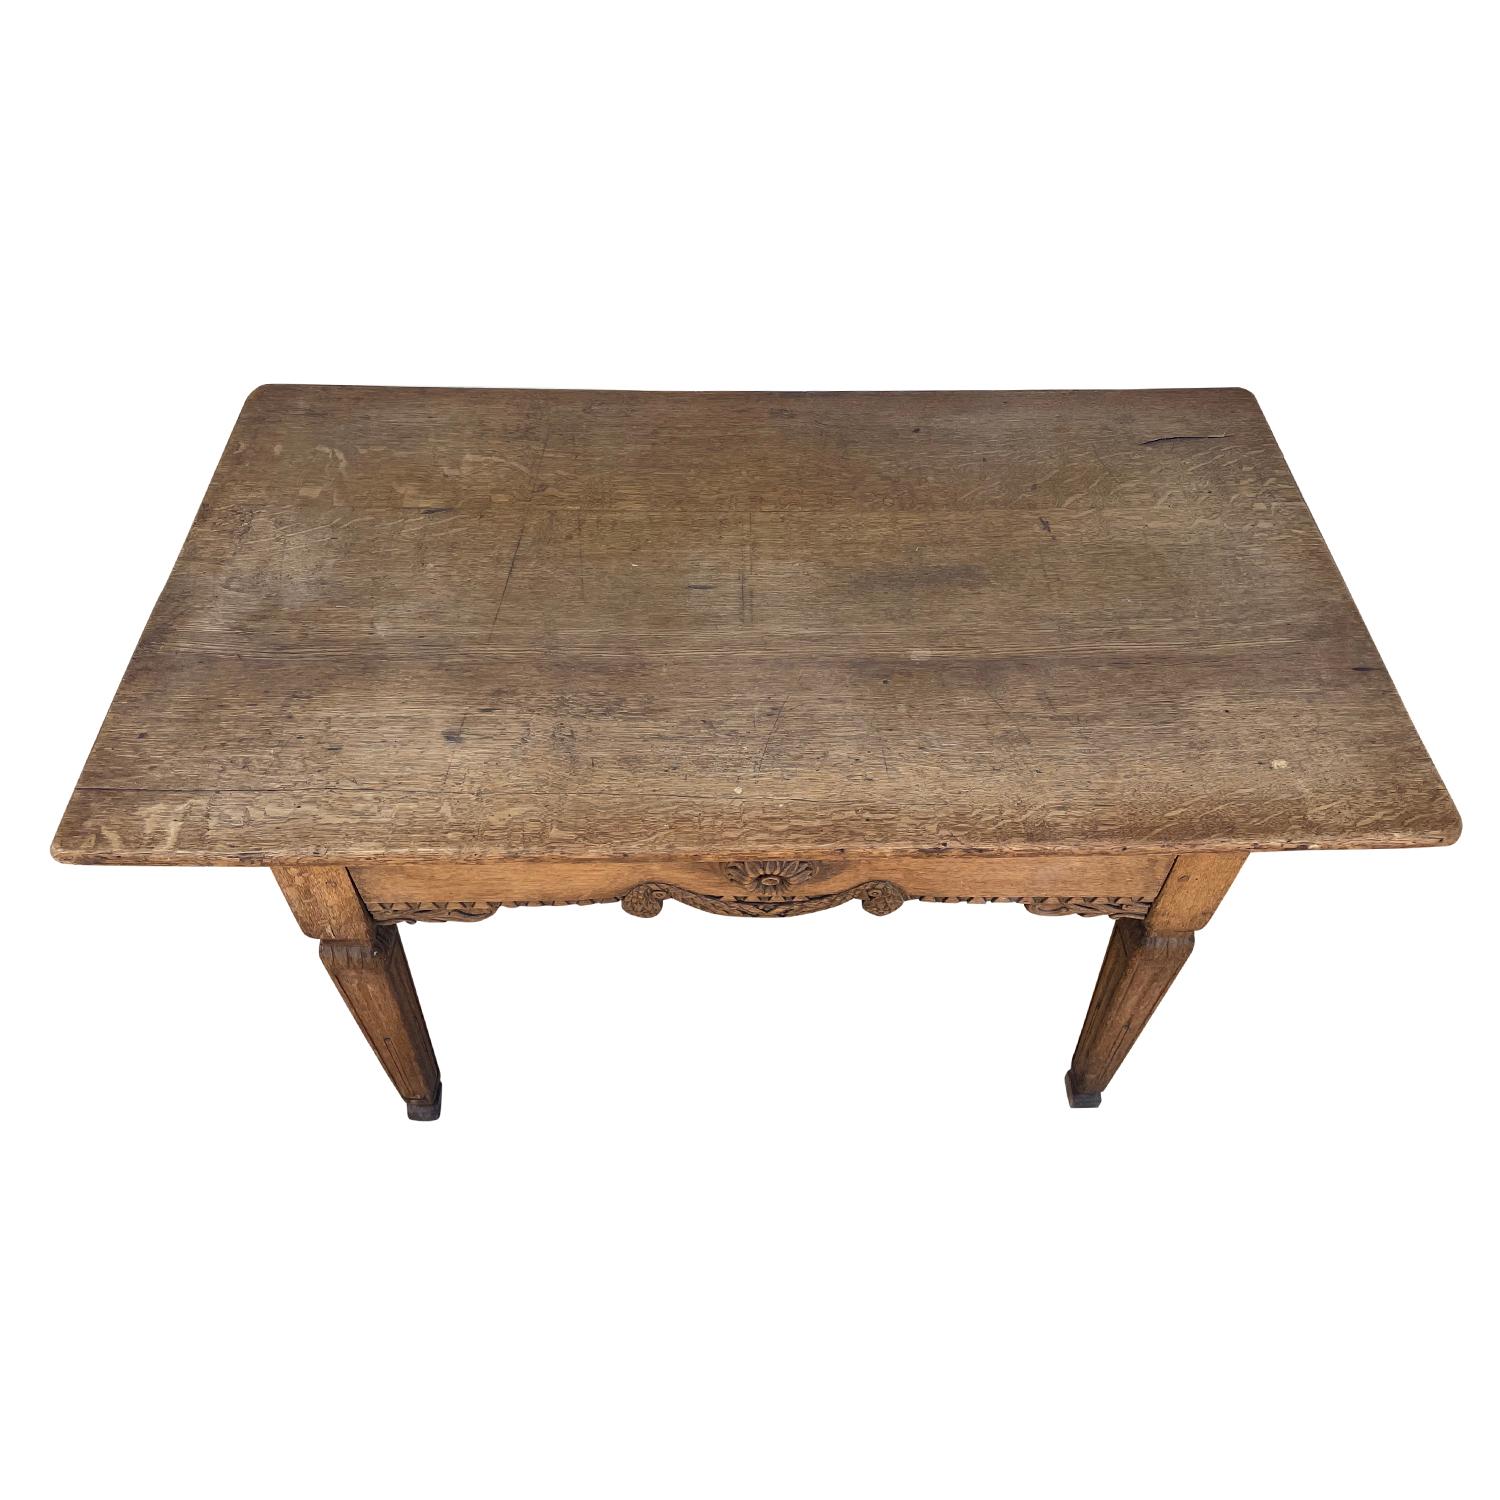 Regency 18th Century French Régence Console Table - Antique Oakwood Farm, End Table